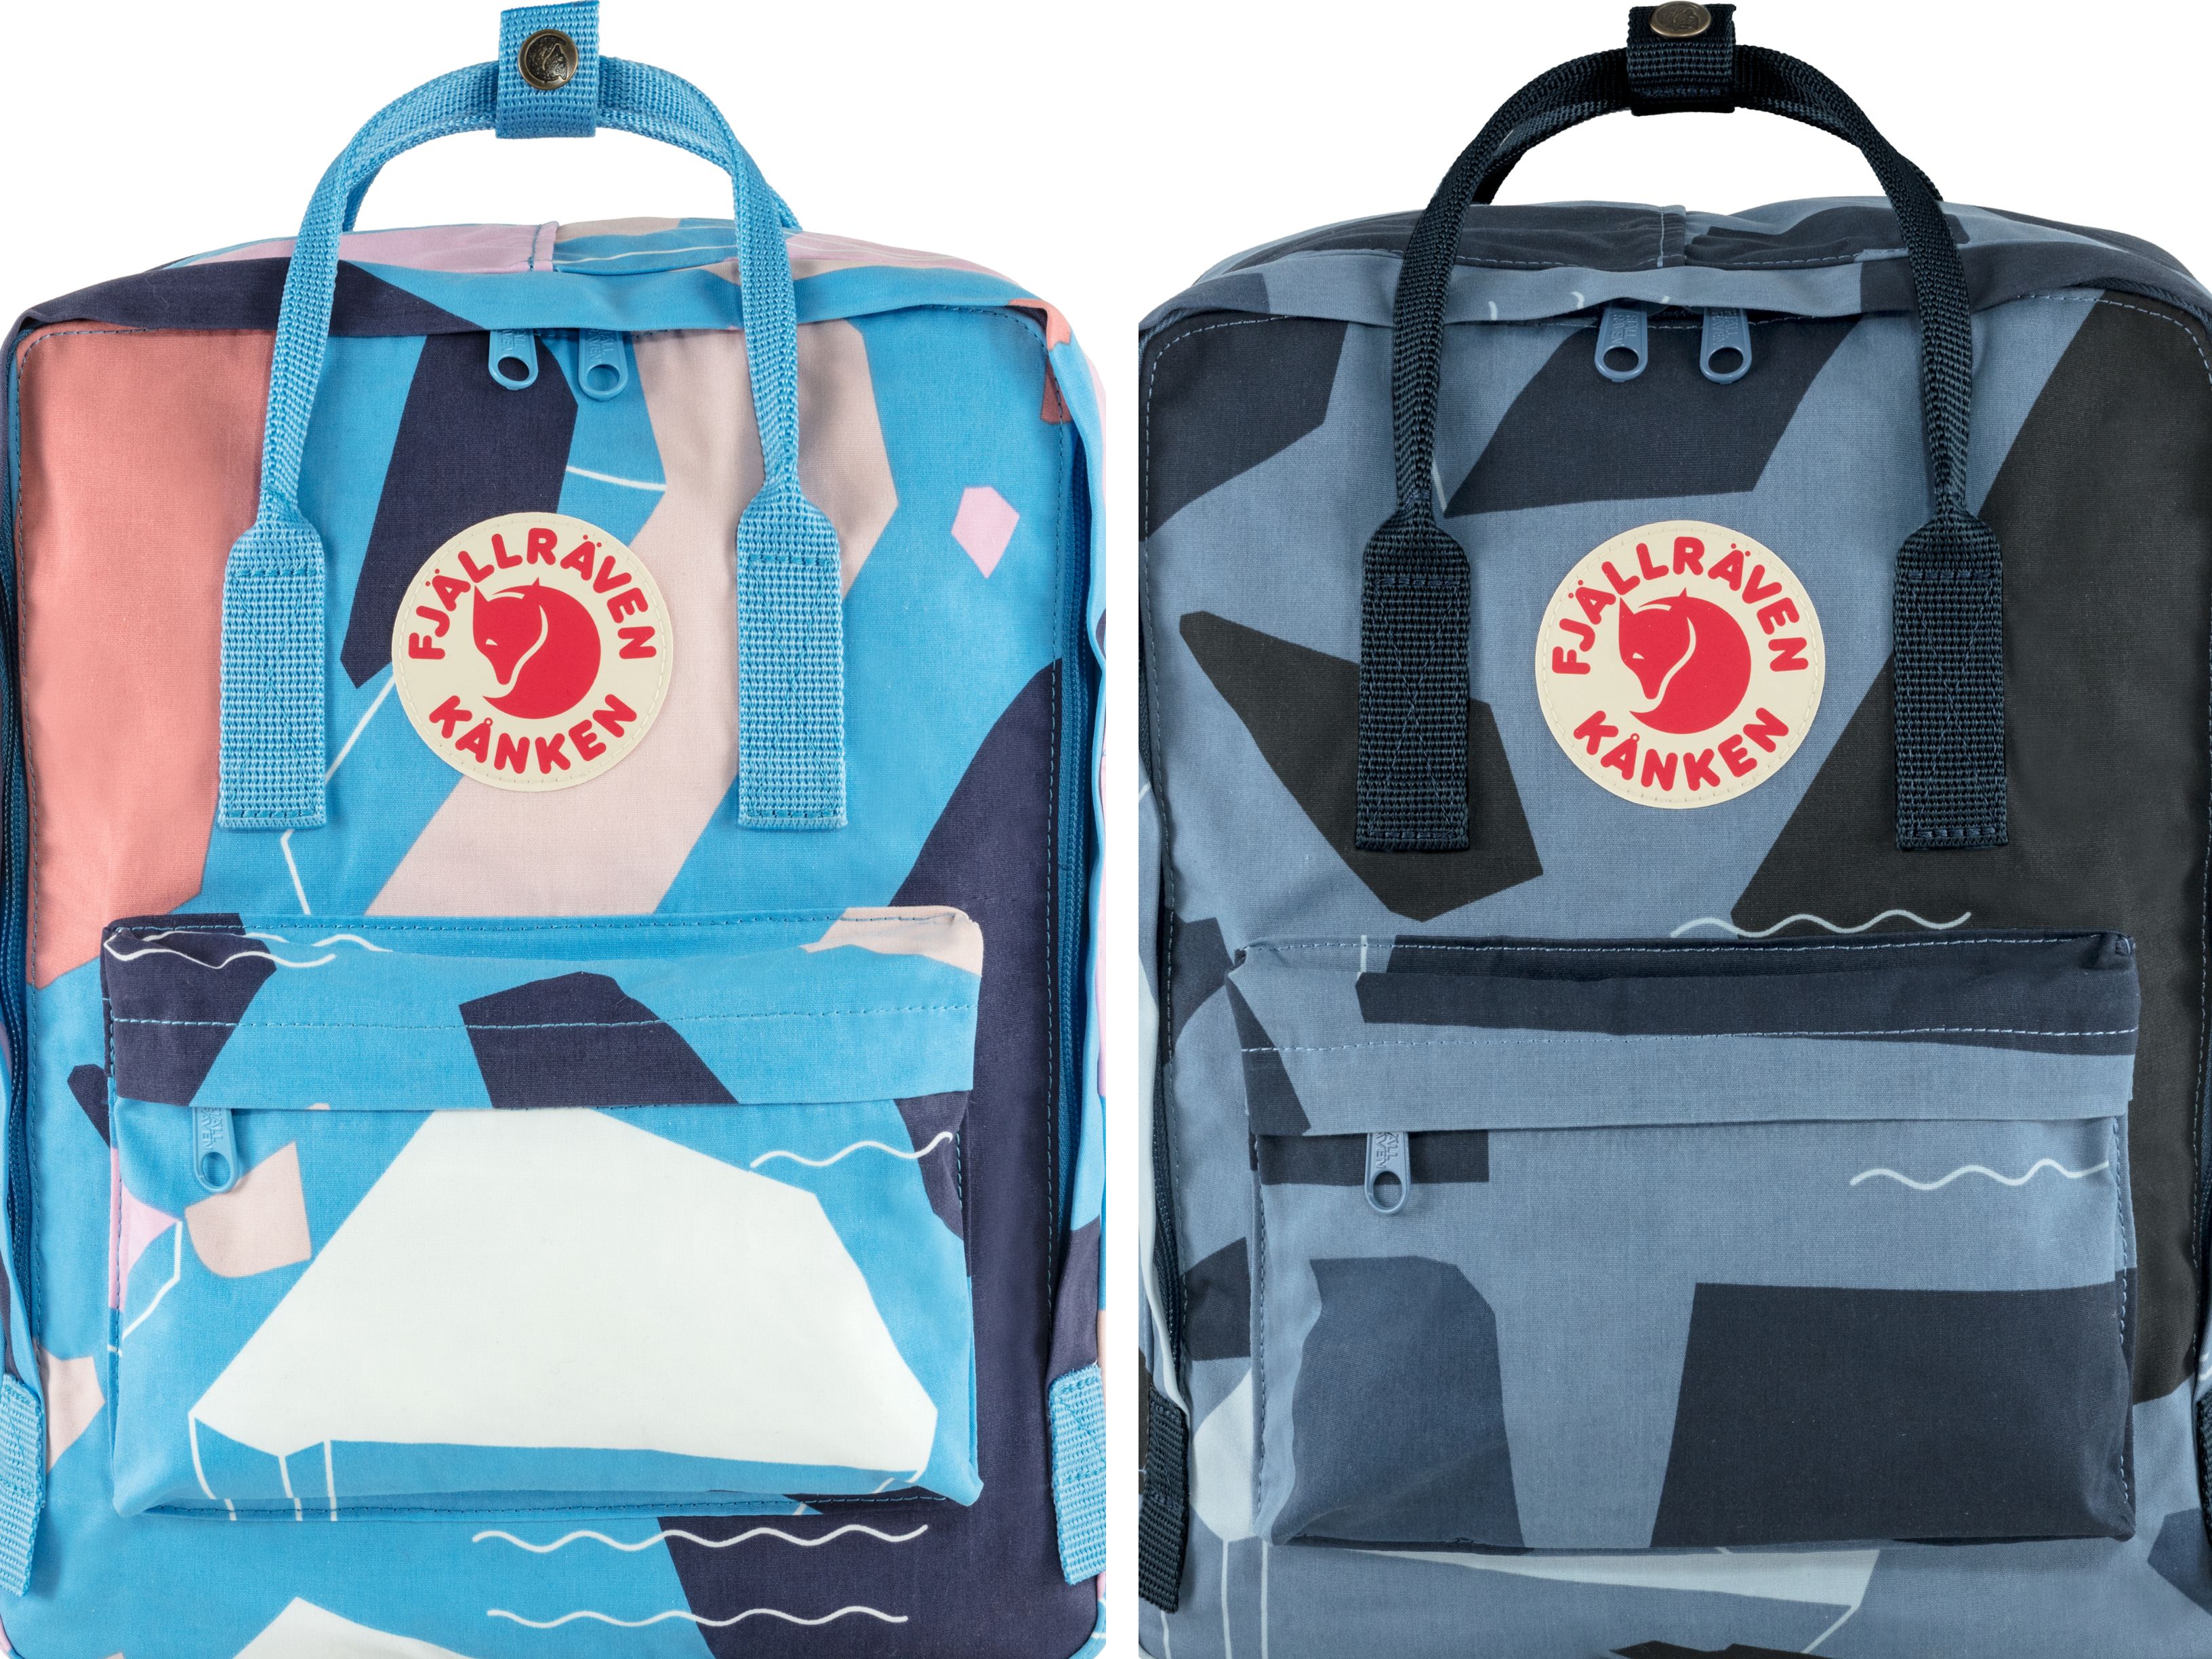 Kånken Art 2021: Η νέα limited edition συλλογή των εμβληματικών backpacks Kånken από ανακυκλωμένο πολυεστέρα και οργανικό βαμβάκι